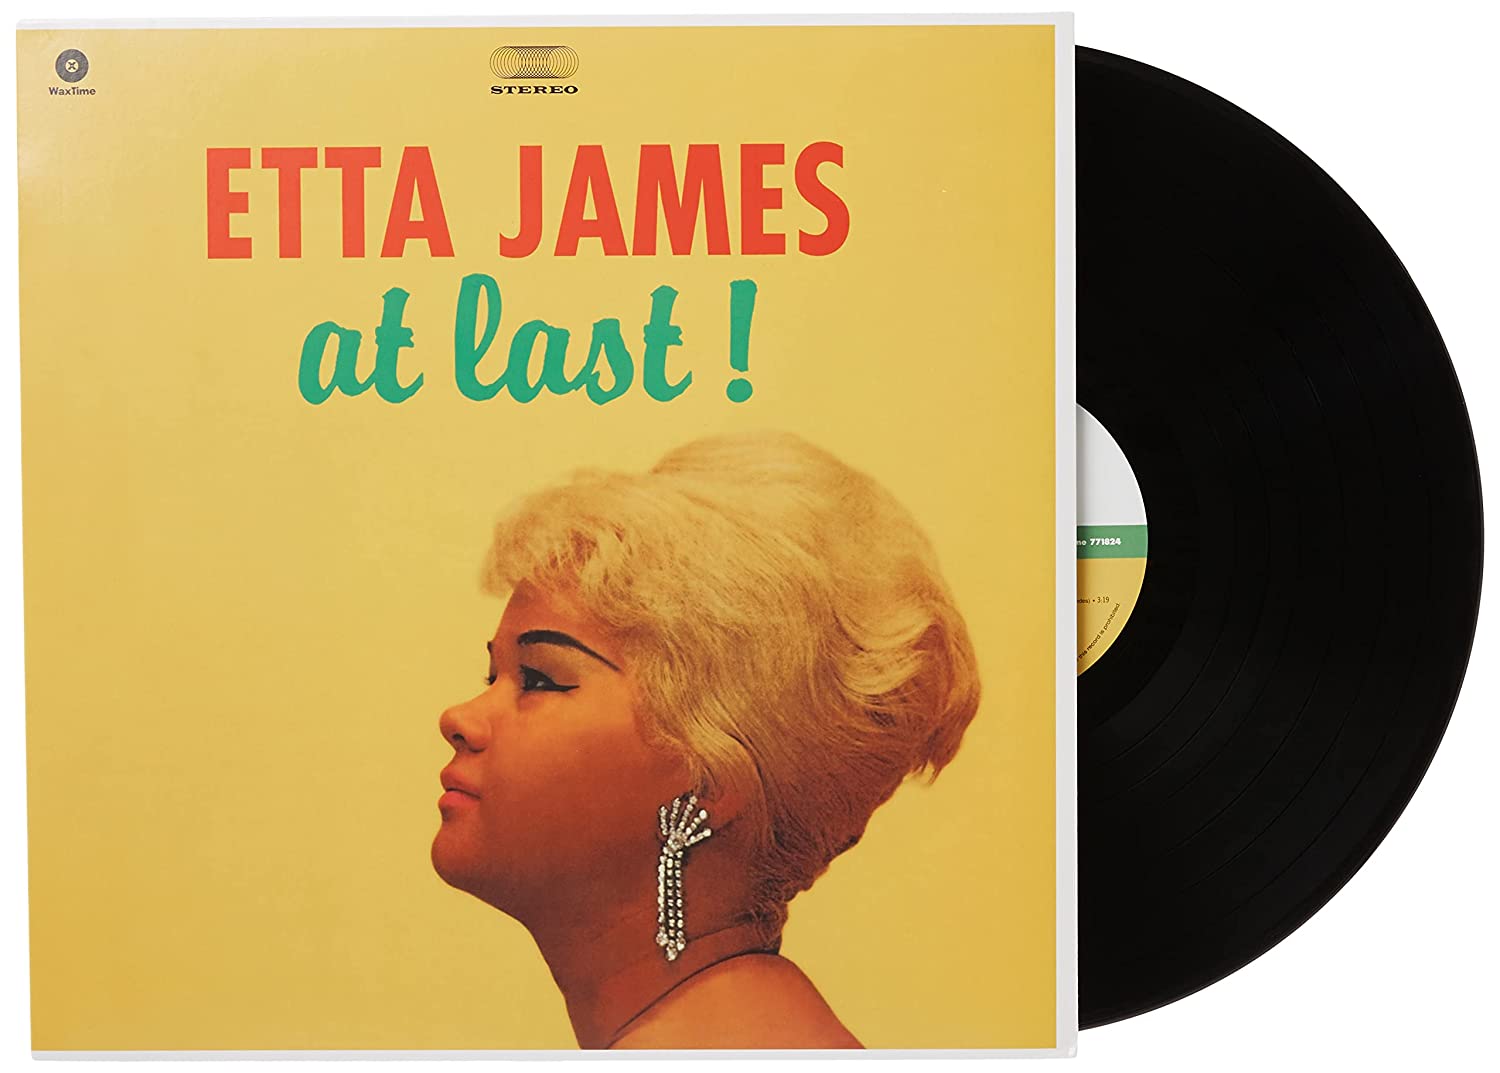 Etta James At Last